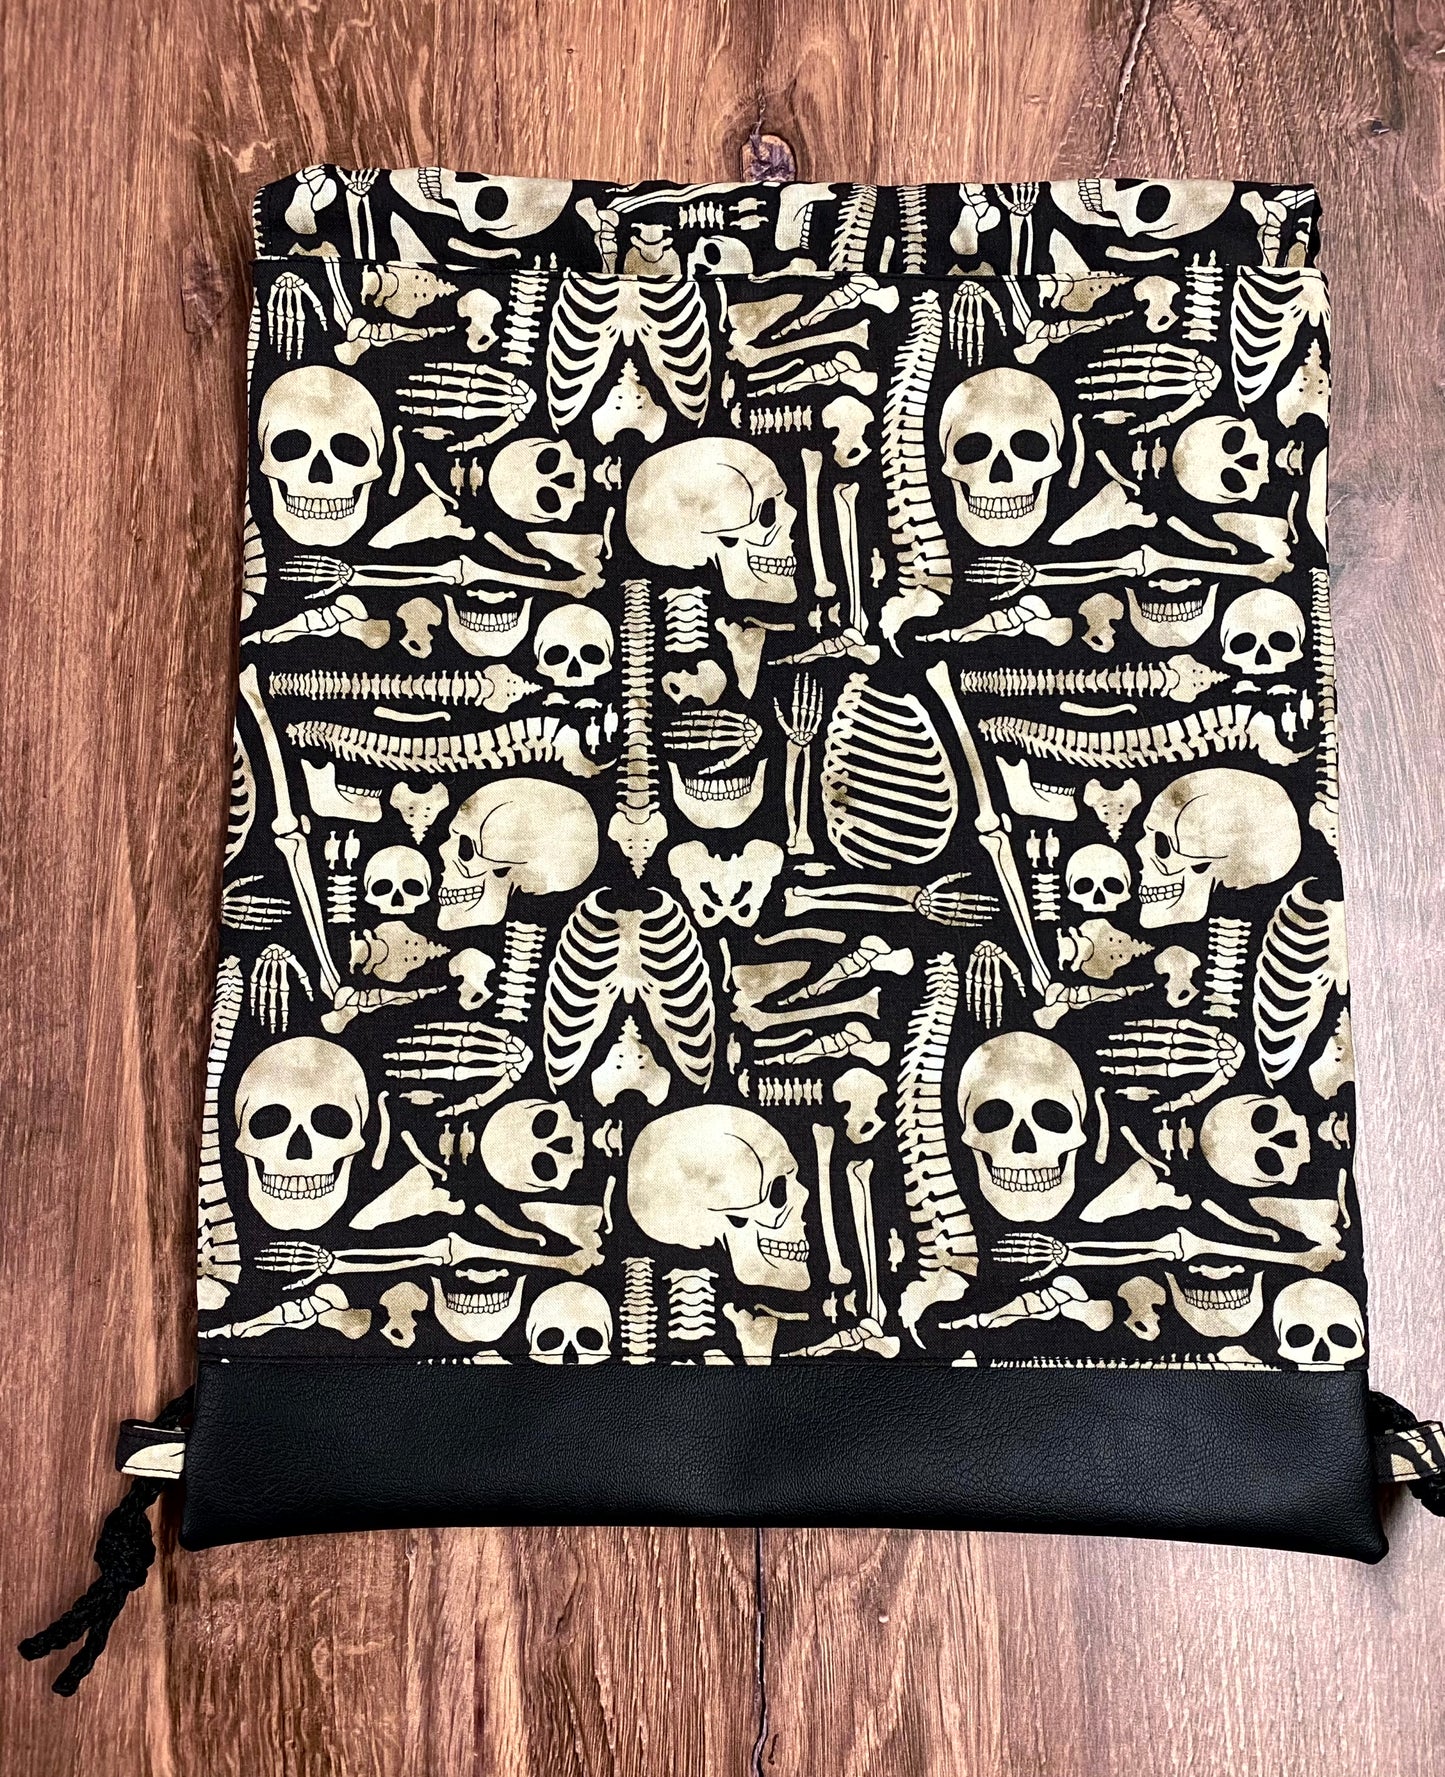 Skeleton Drawstring Bag - Handmade Drawstring Bag – Drawstring Backpack - On the Go Bag - Overnight Bag